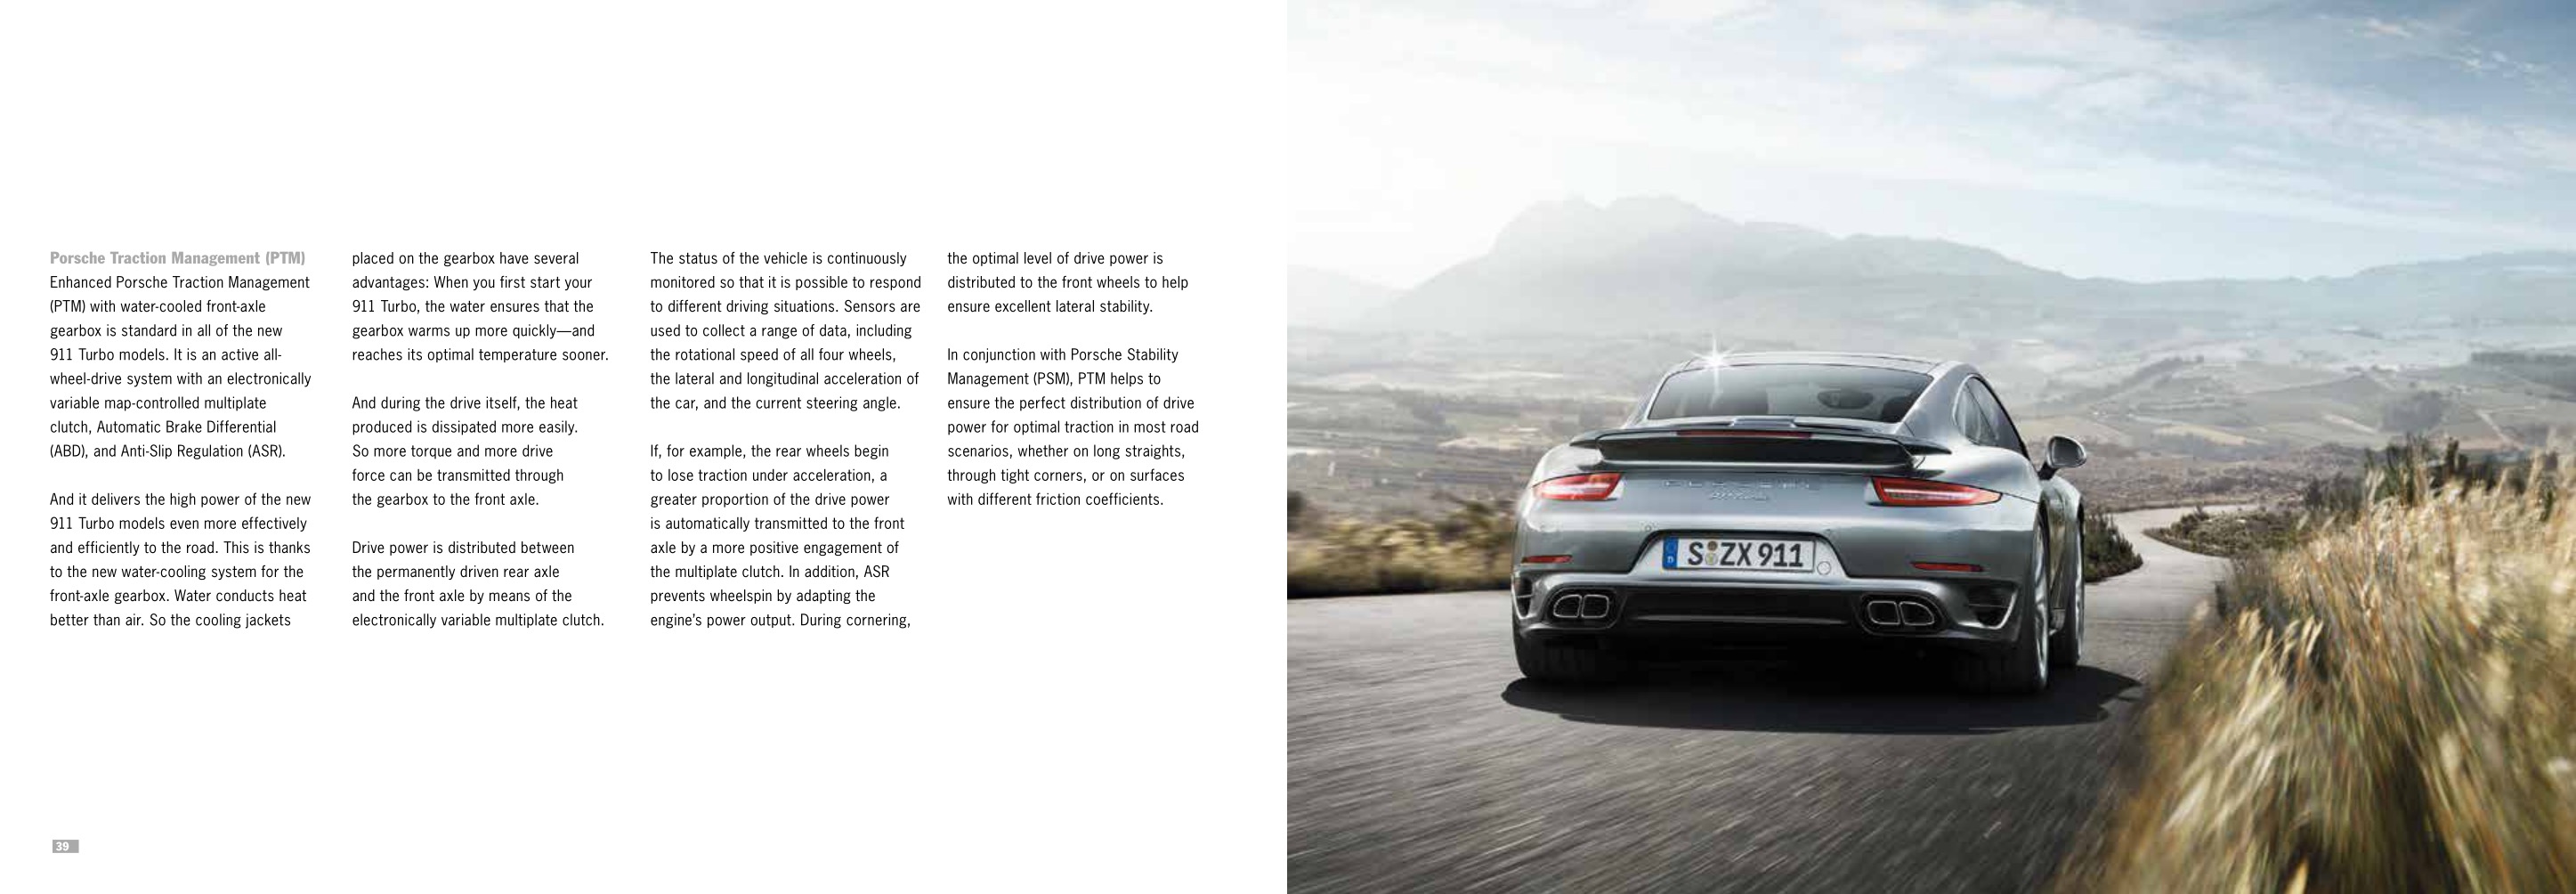 2014 Porsche 911 Turbo Brochure Page 34